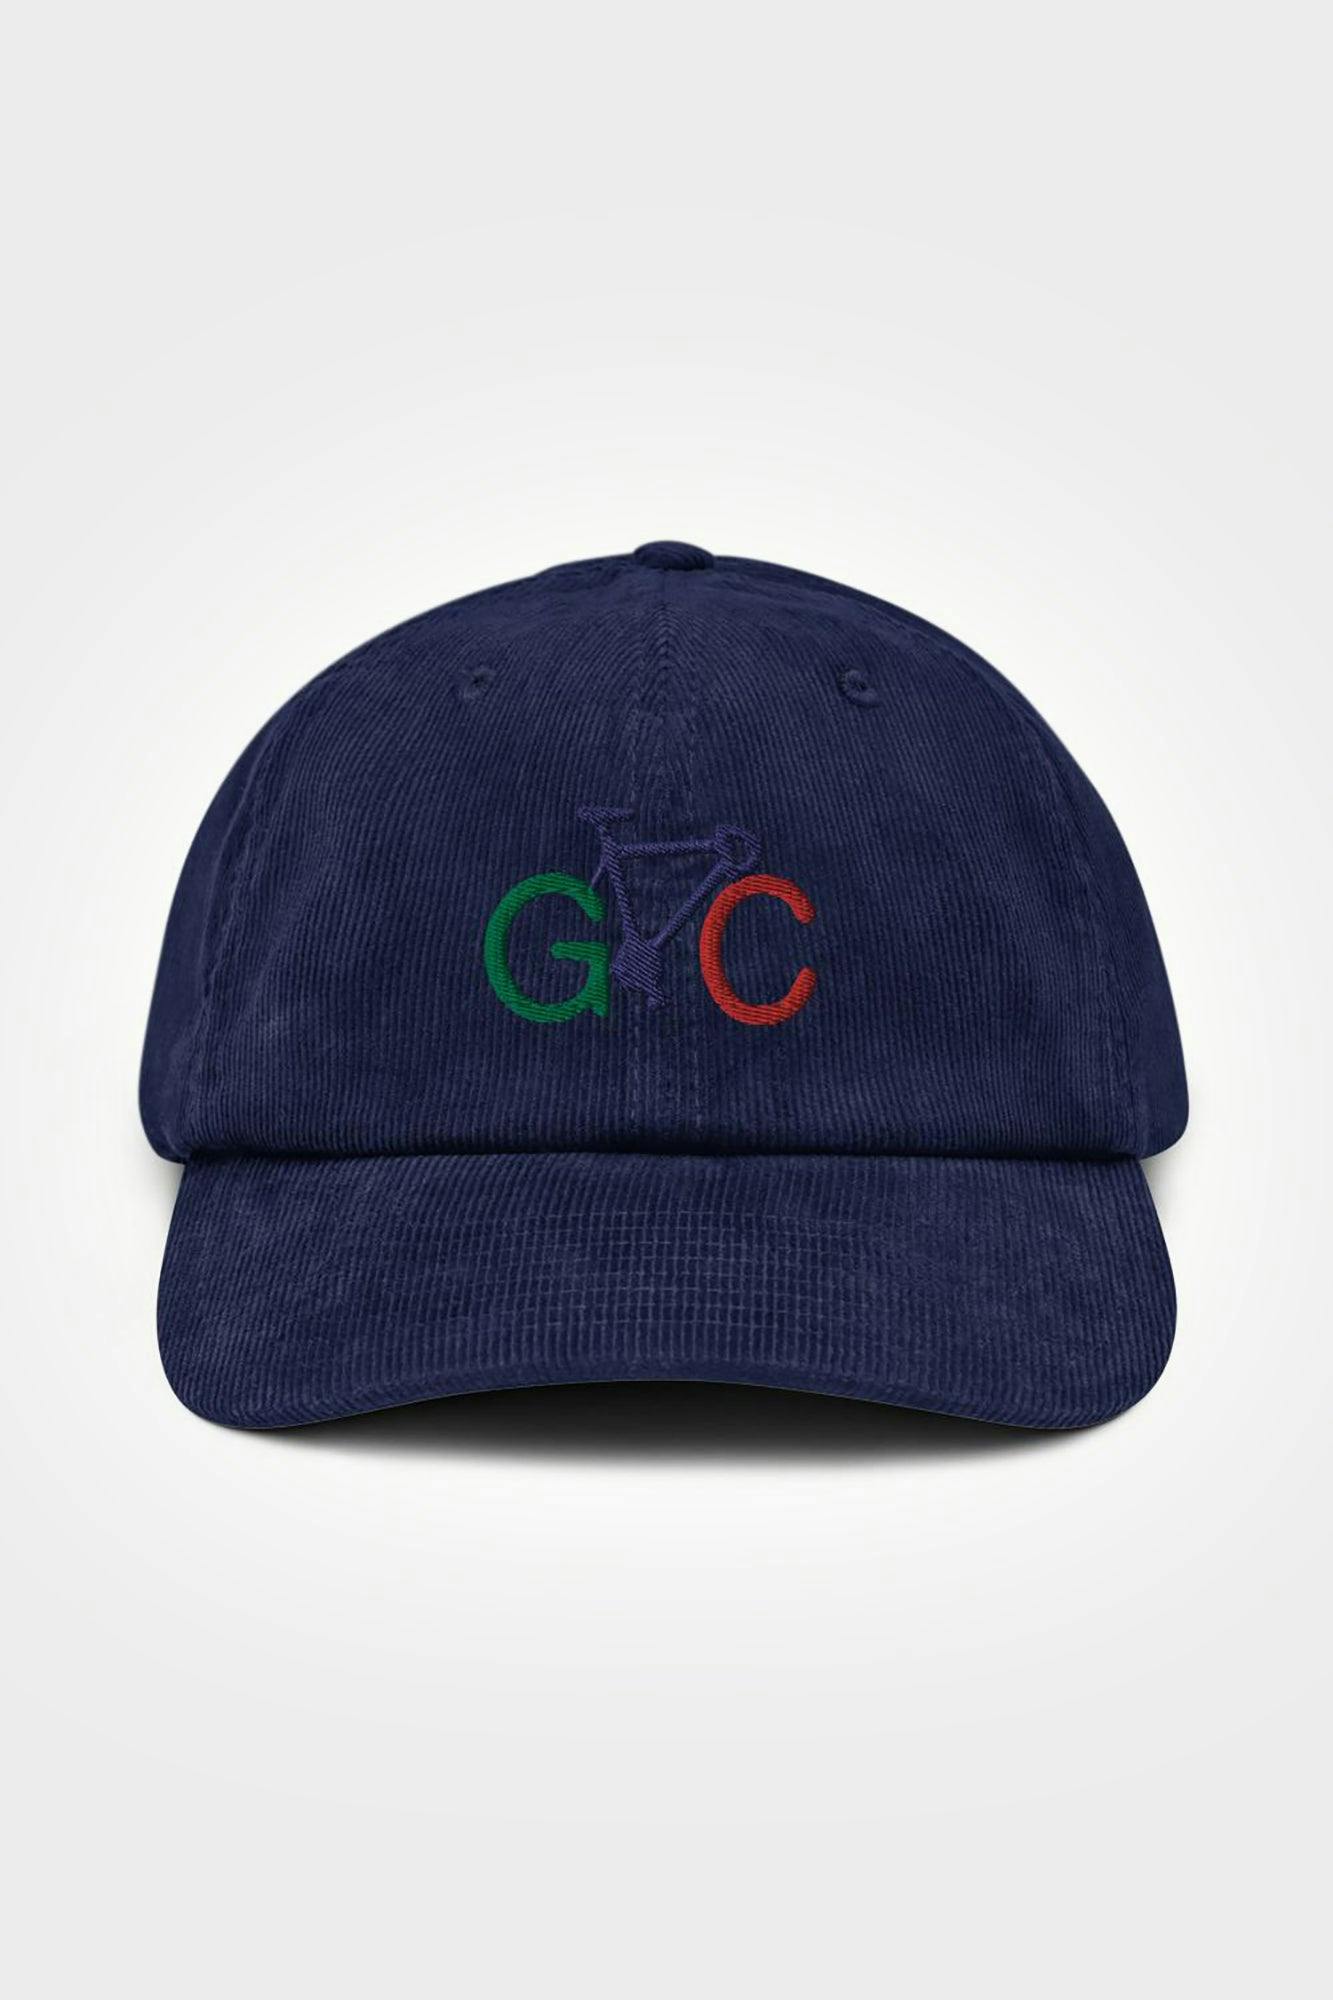 GC Wheels Logo Embroidered Corduroy Hat Navy